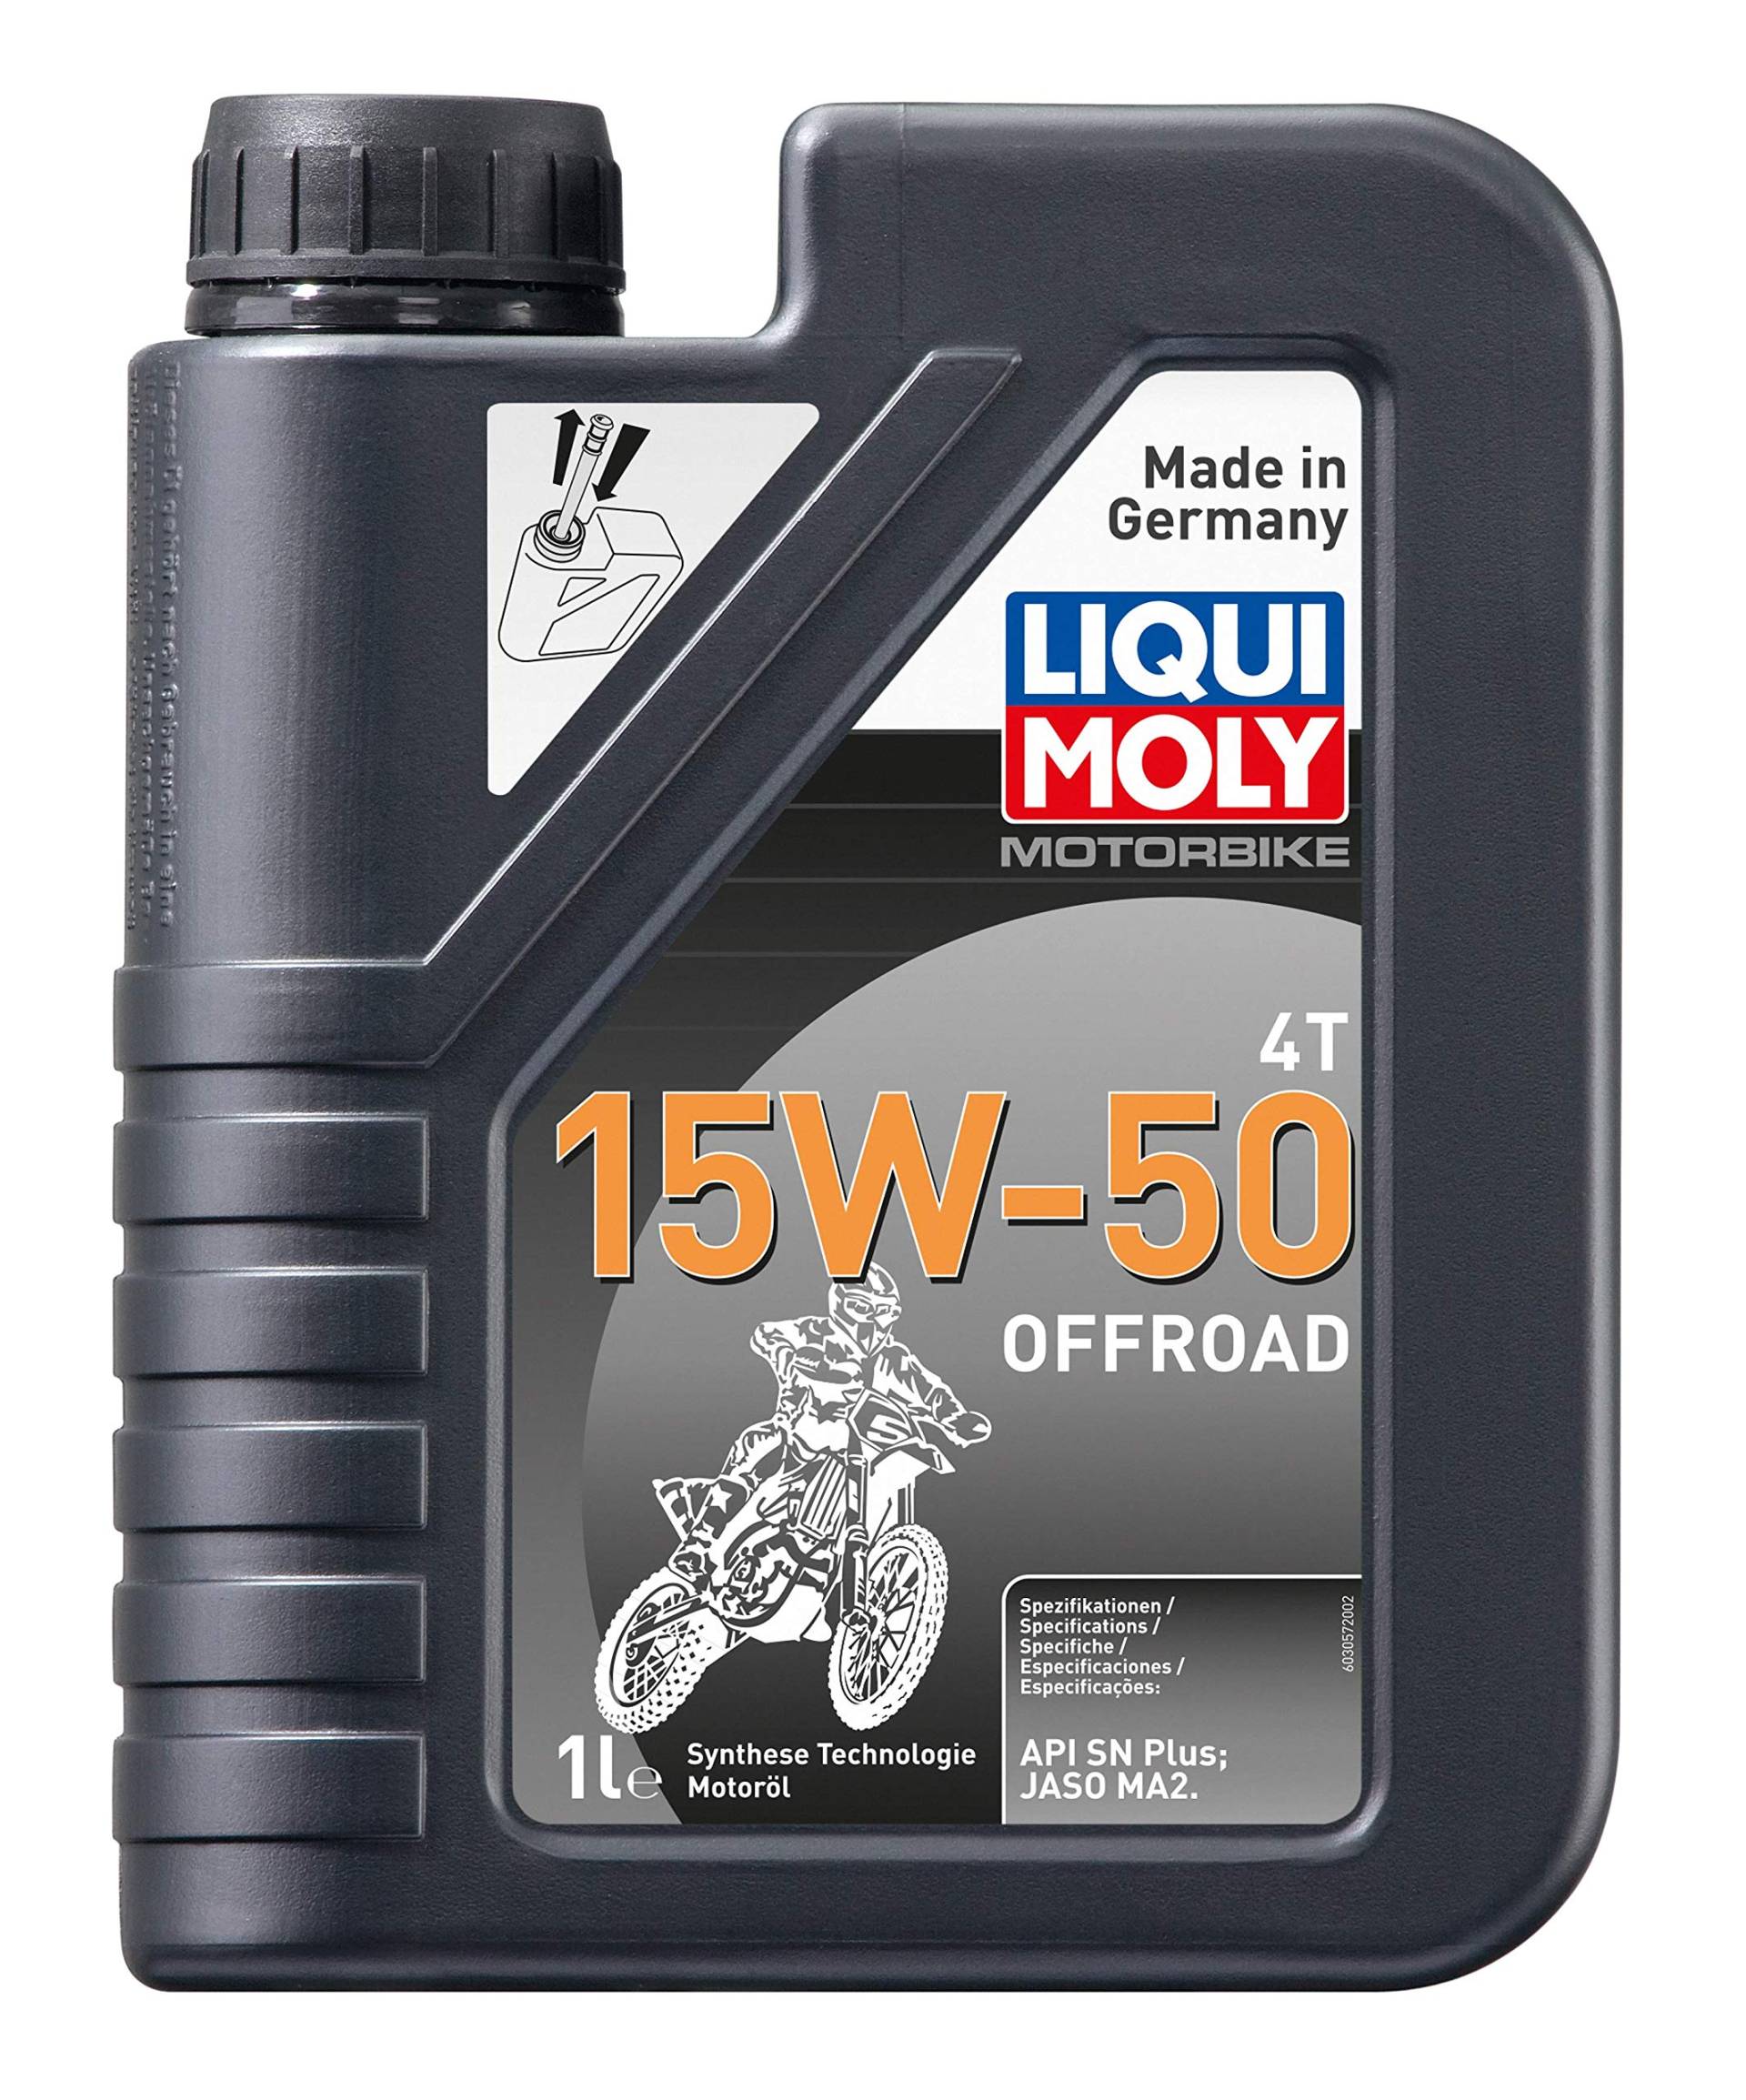 LIQUI MOLY Motorbike 4T 15W-50 Offroad | 1 L | Motorrad Synthesetechnologie Motoröl | Art.-Nr.: 3057 von Liqui Moly